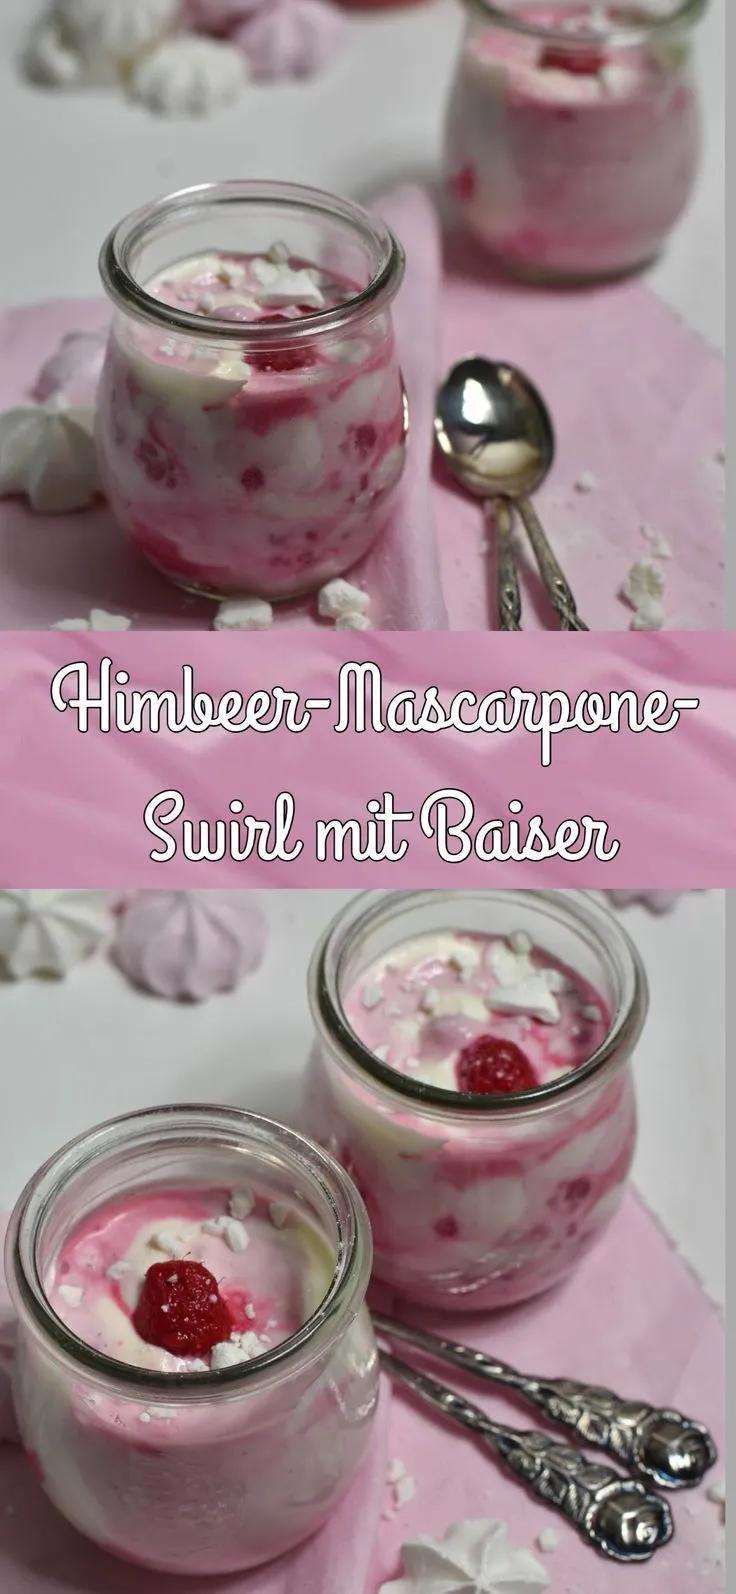 Himbeer-Mascarpone-Swirl mit Baiser | Himbeer mascarpone, Himbeeren ...